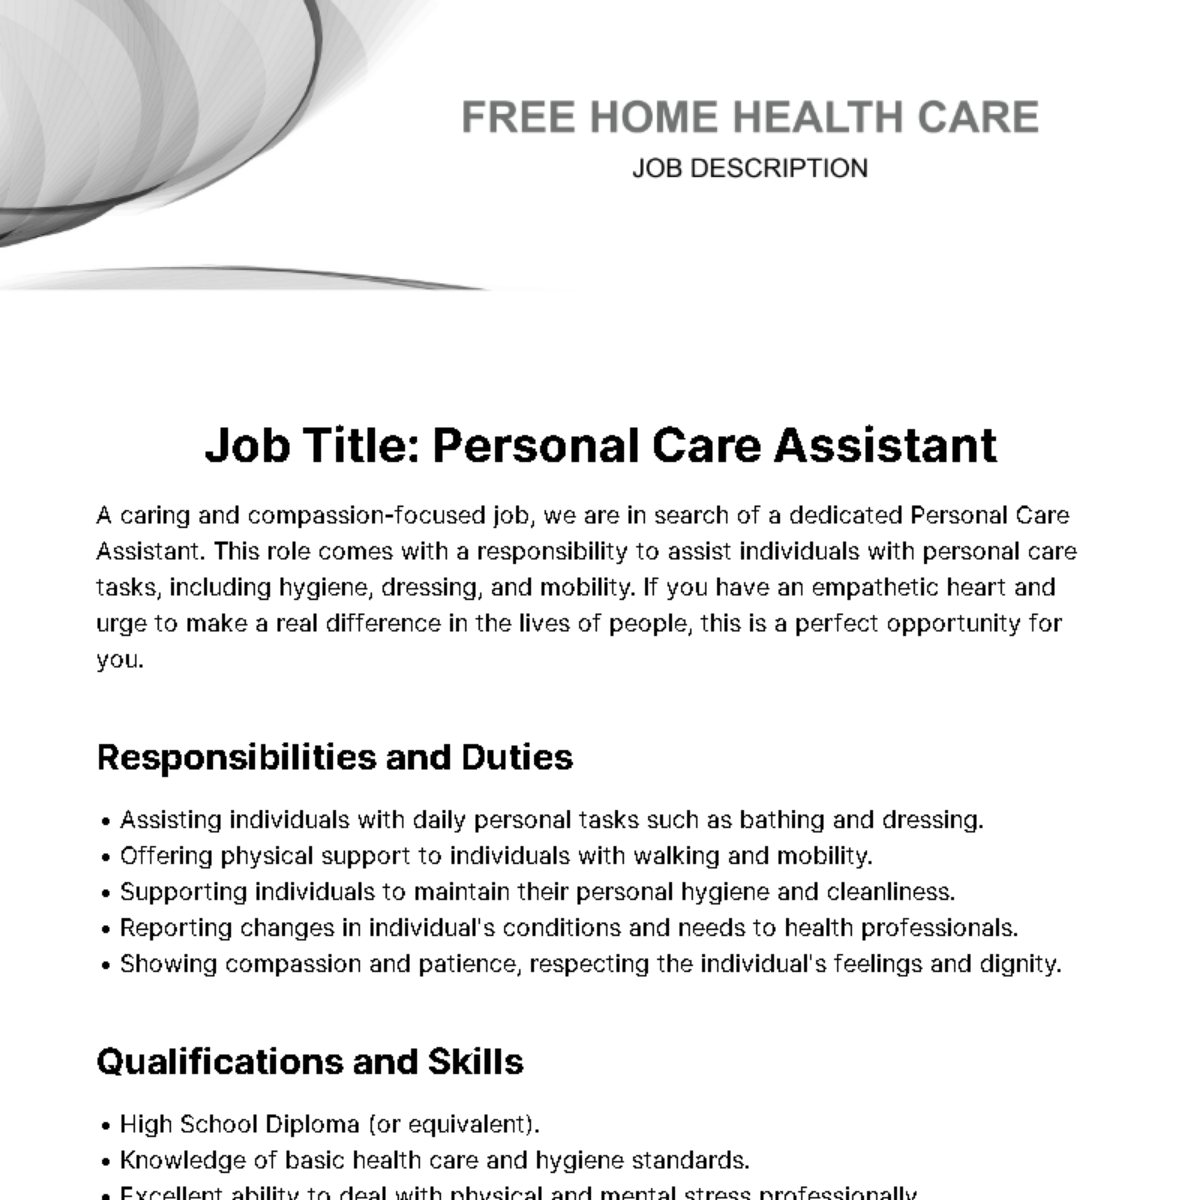 Free Home Health Care Job Description Template